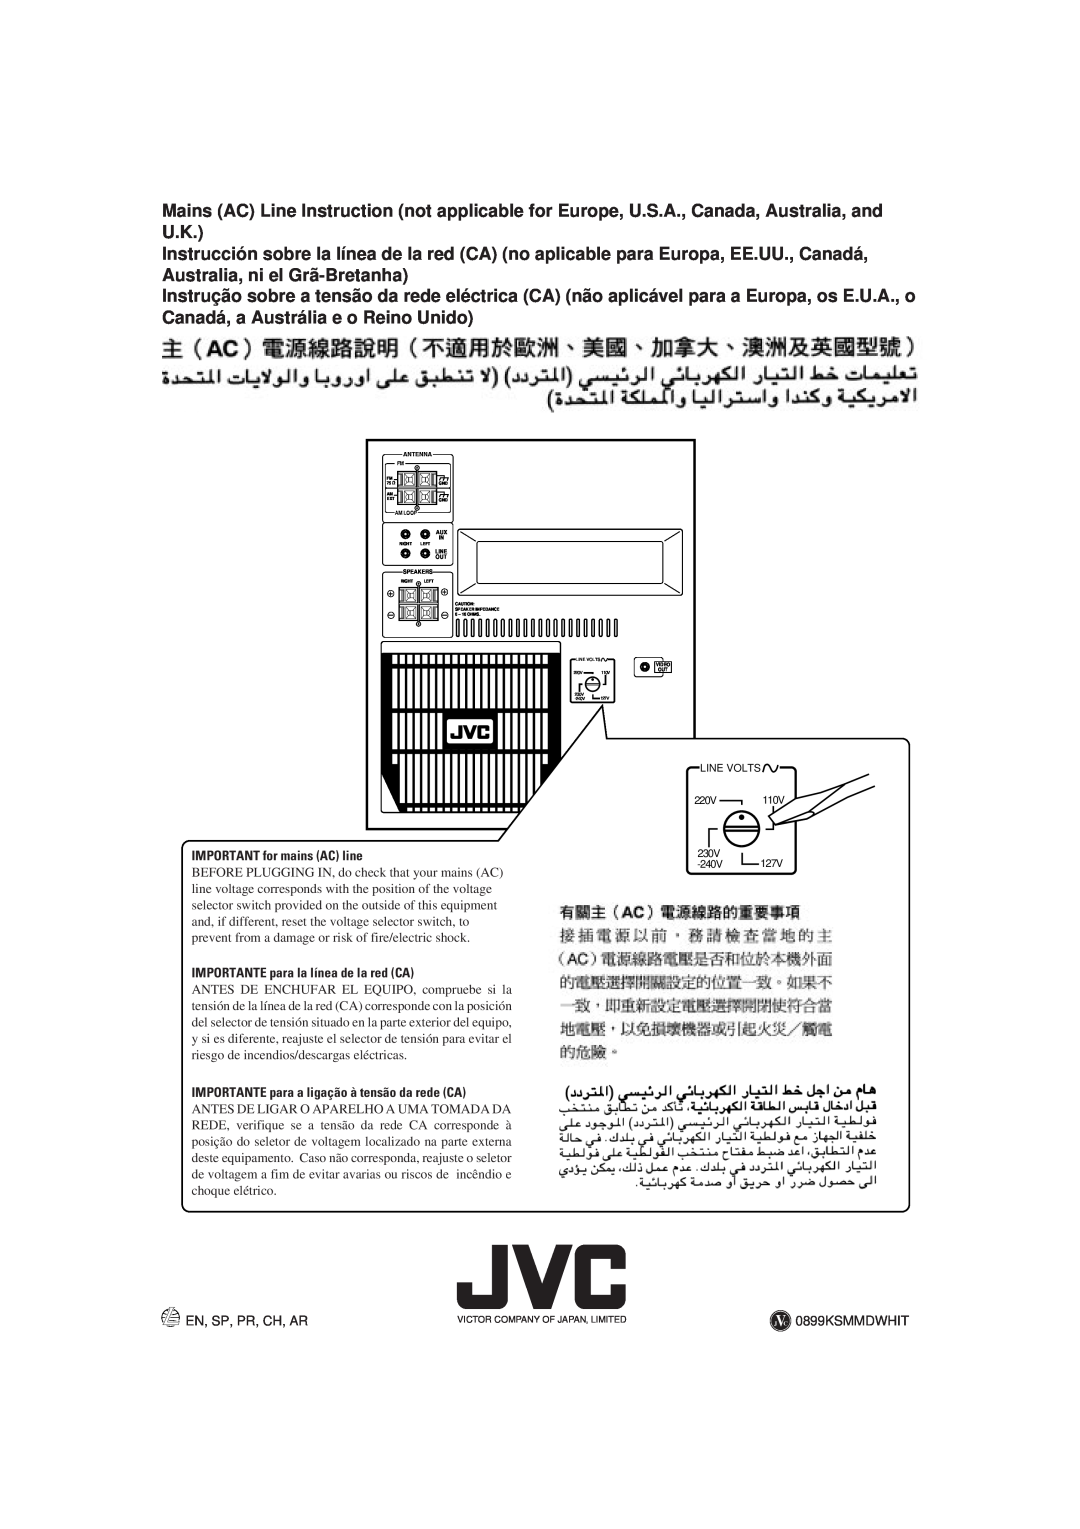 JVC MX-J111V manual IMPORTANT for mains AC line, IMPORTANTE para la línea de la red CA, JVC 0899KSMMDWHIT 